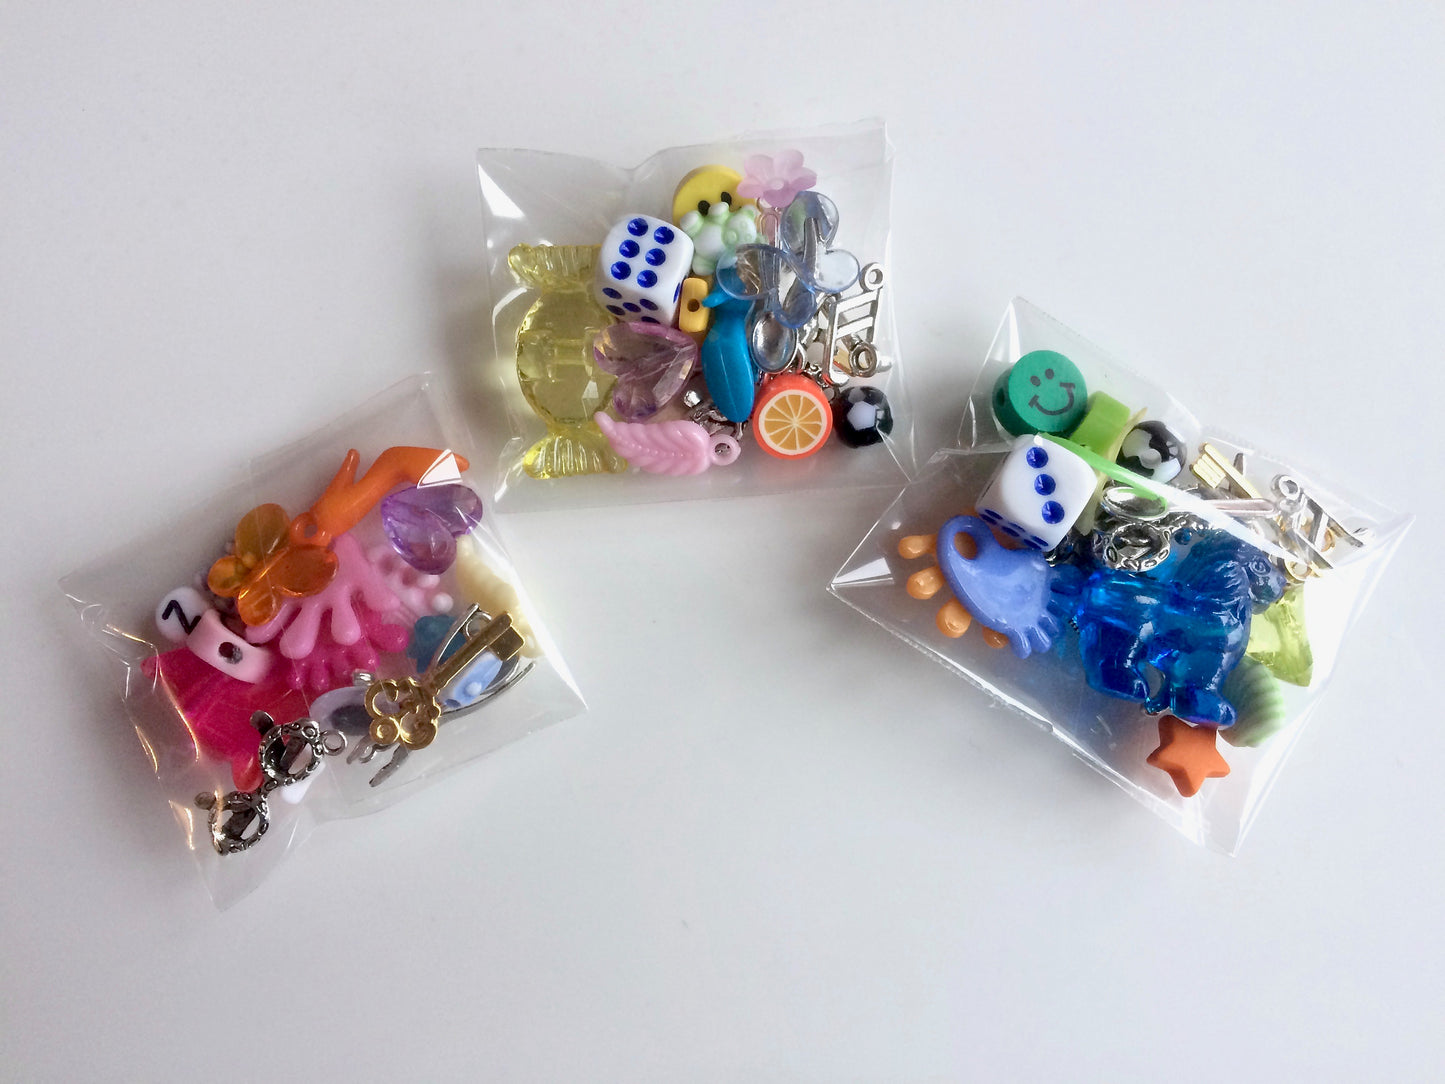 I Spy Bag Trinkets - Packet of 20 trinkets